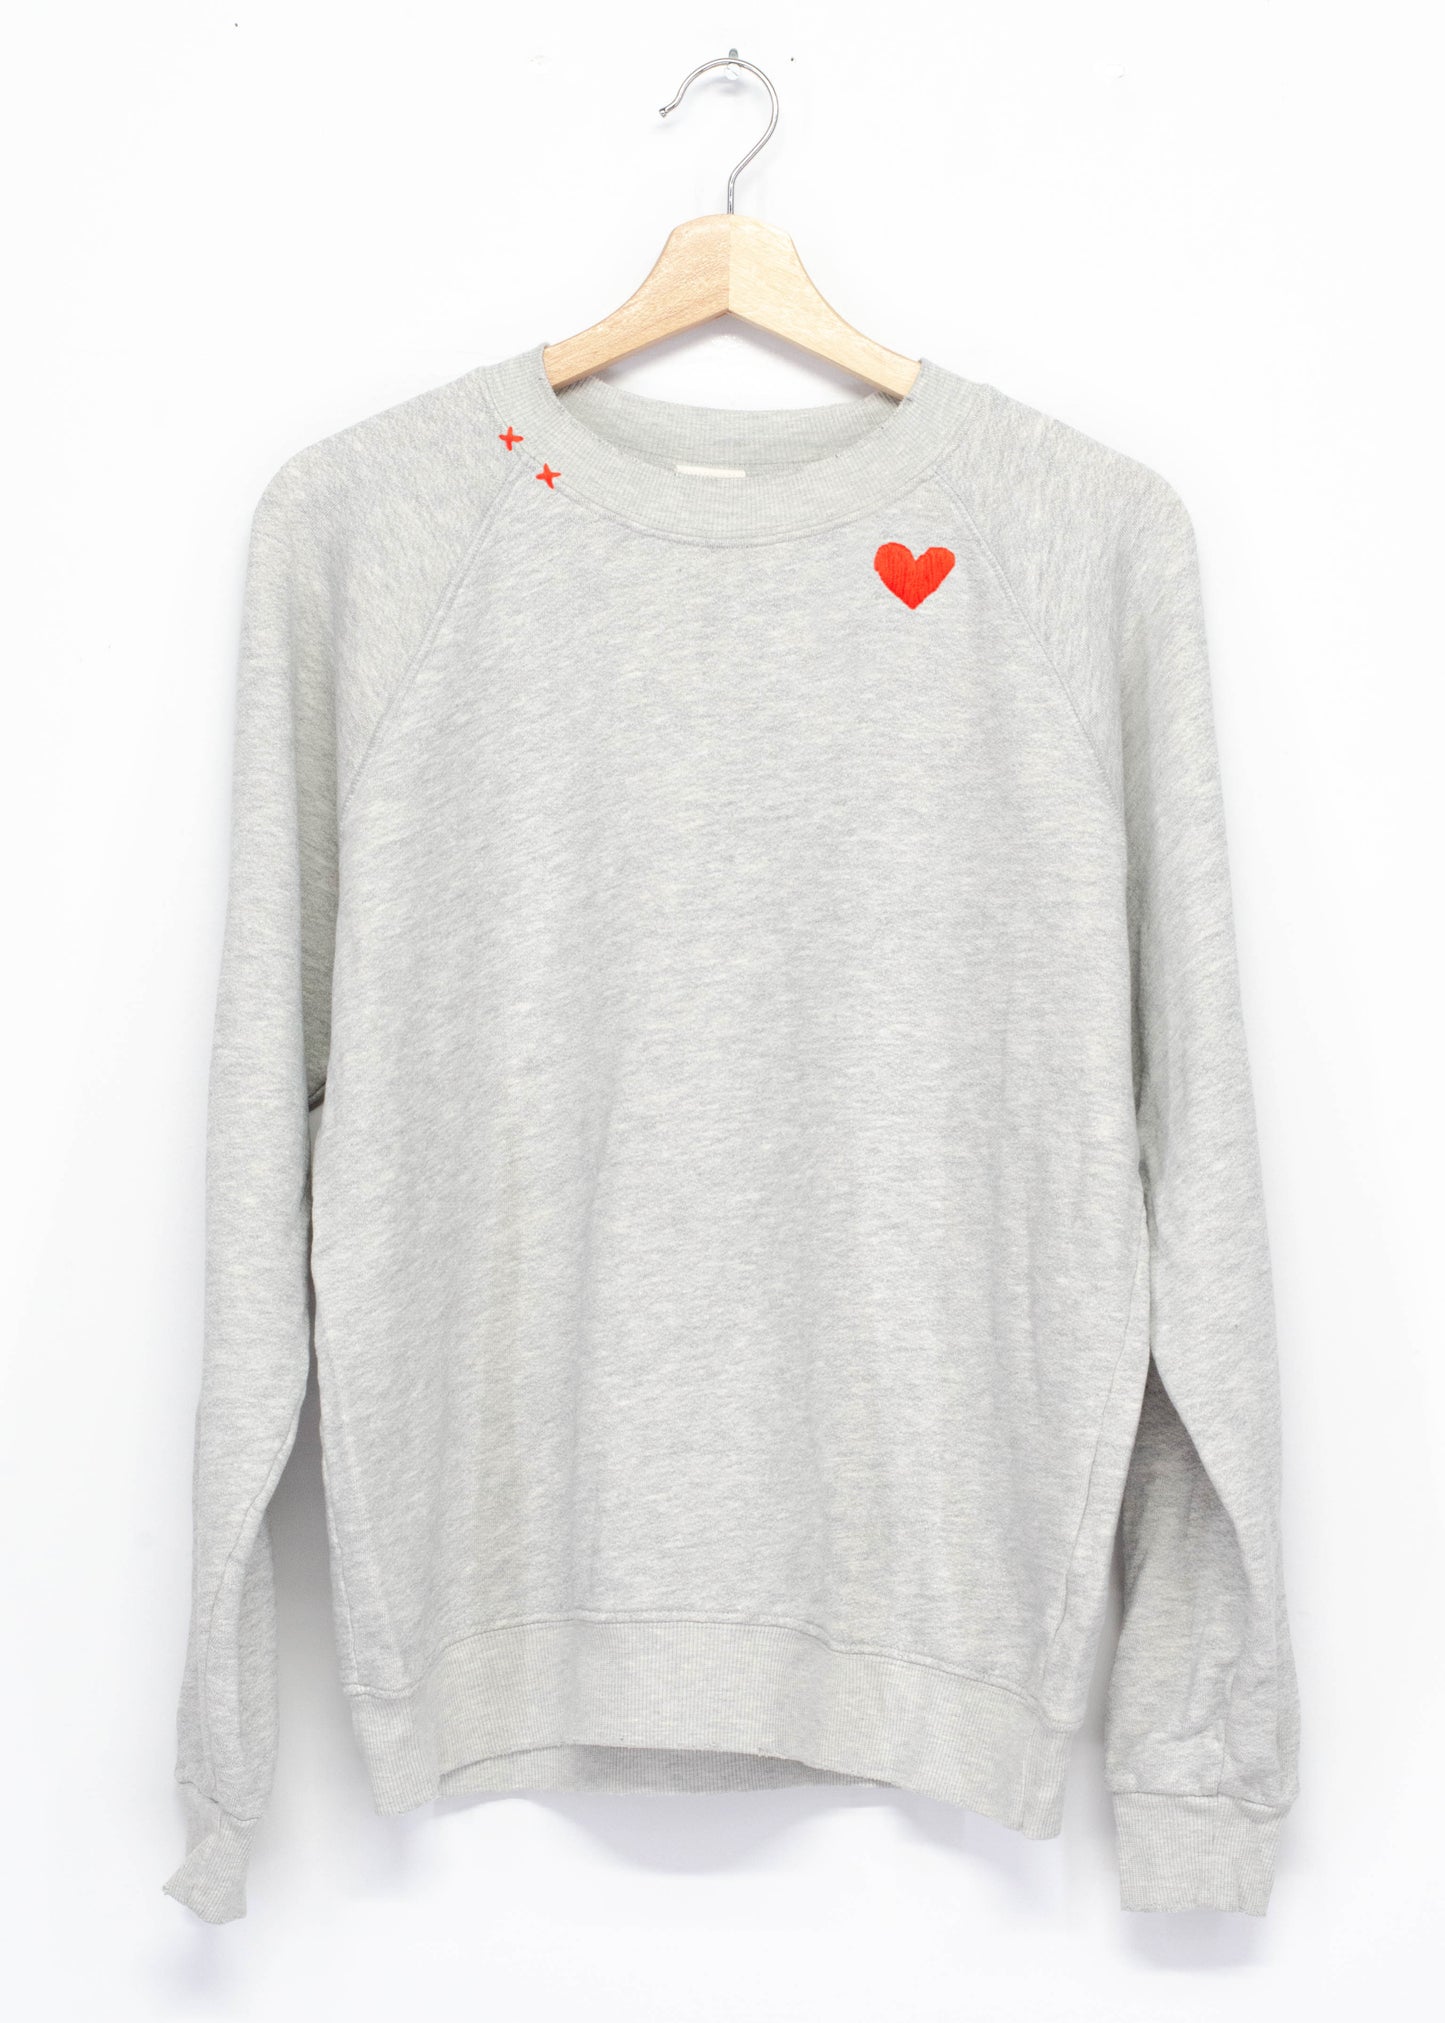 Heart Sweatshirt (19Colors)